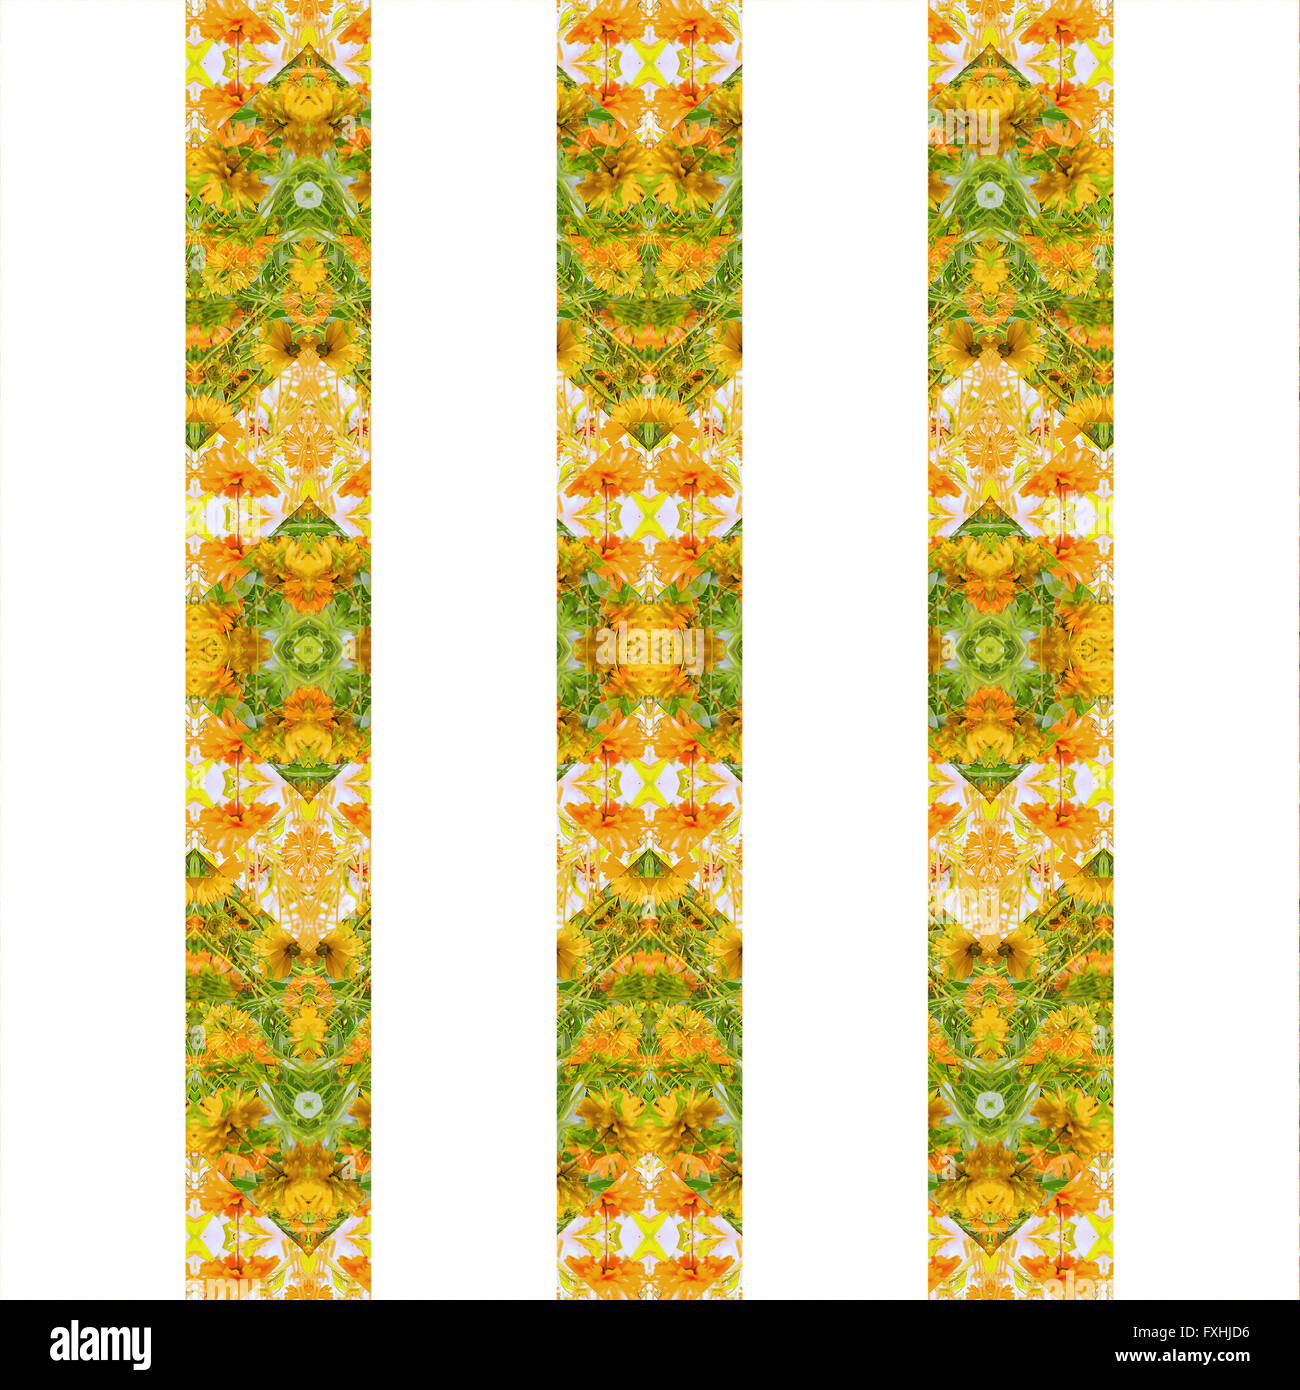 Digital collage technique stylized floral decorative stripes pattern design against white background Stock Photo